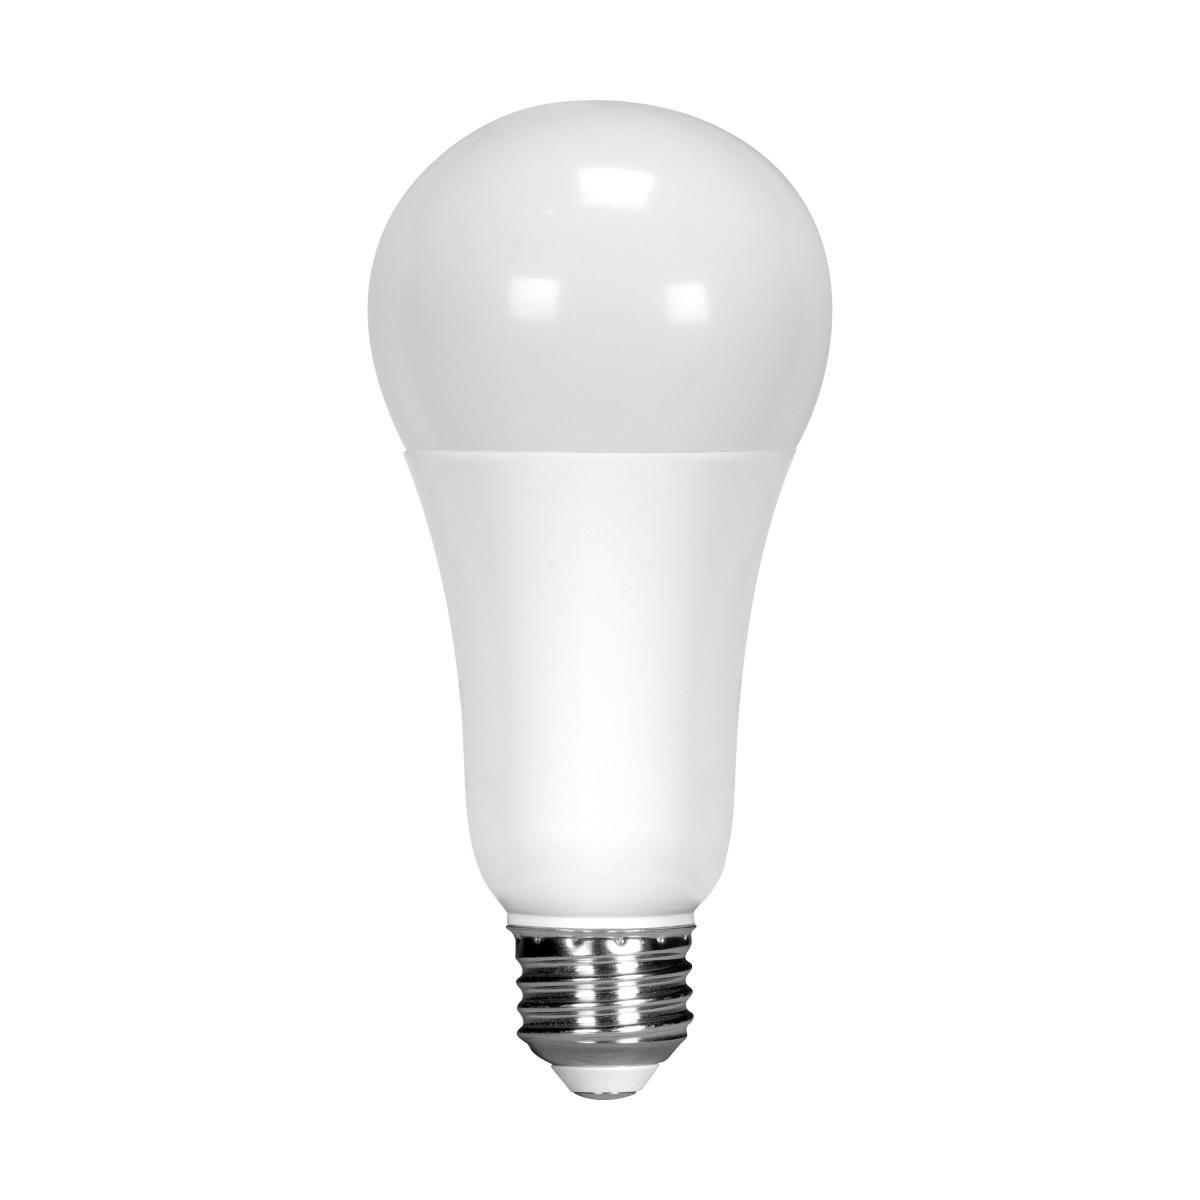 A19 LED Bulb, 100W Equivalent, 17 Watt, 1600 Lumens, 5000K, E26 Medium Base, Frosted Finish - Bees Lighting